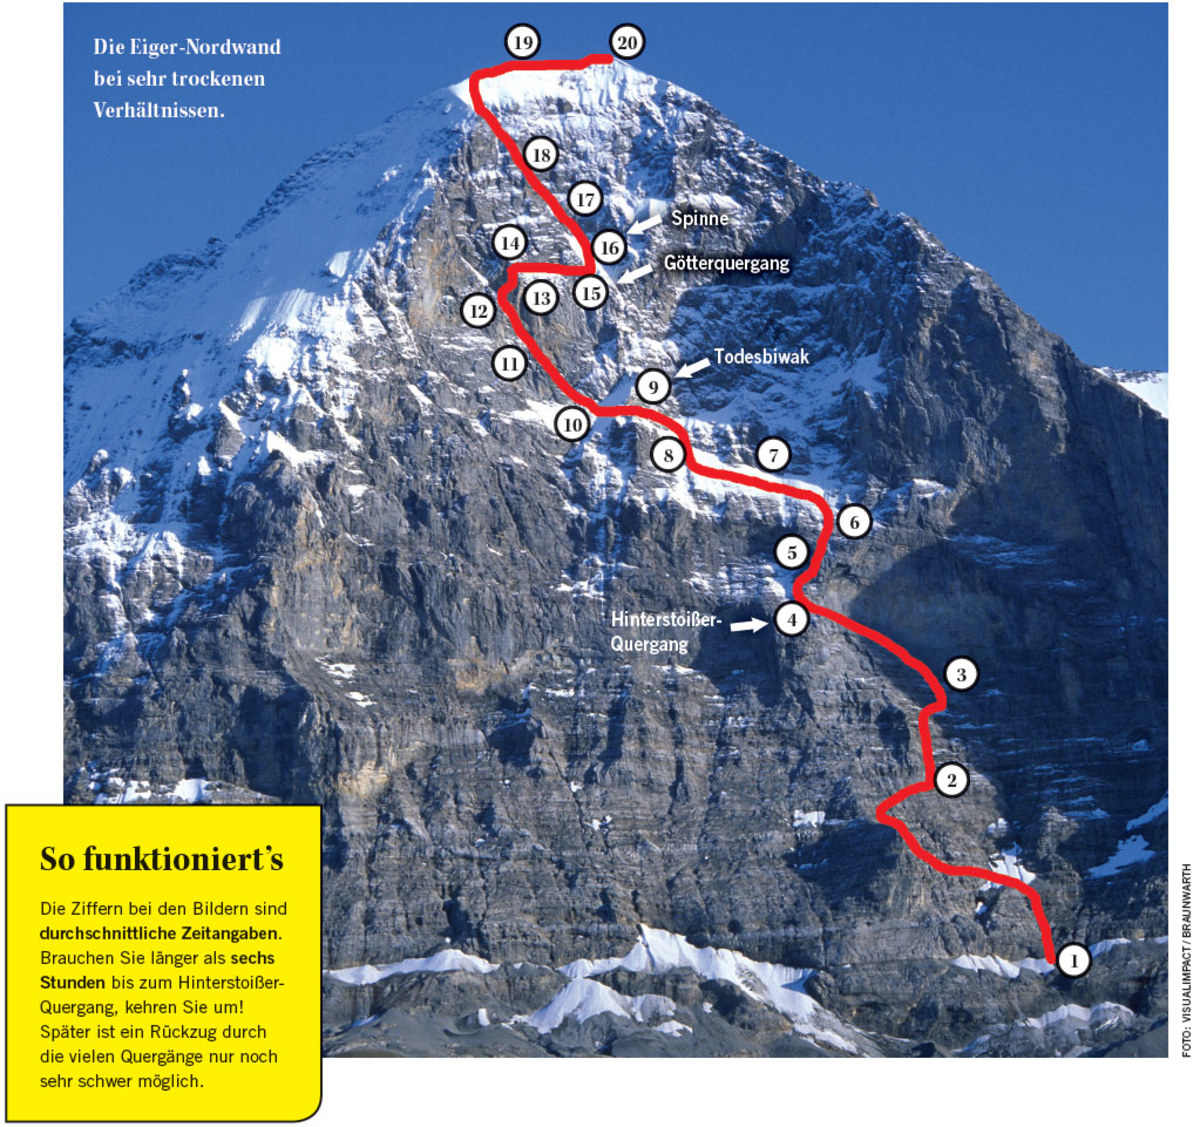 Eiger Nordwand: Die Route